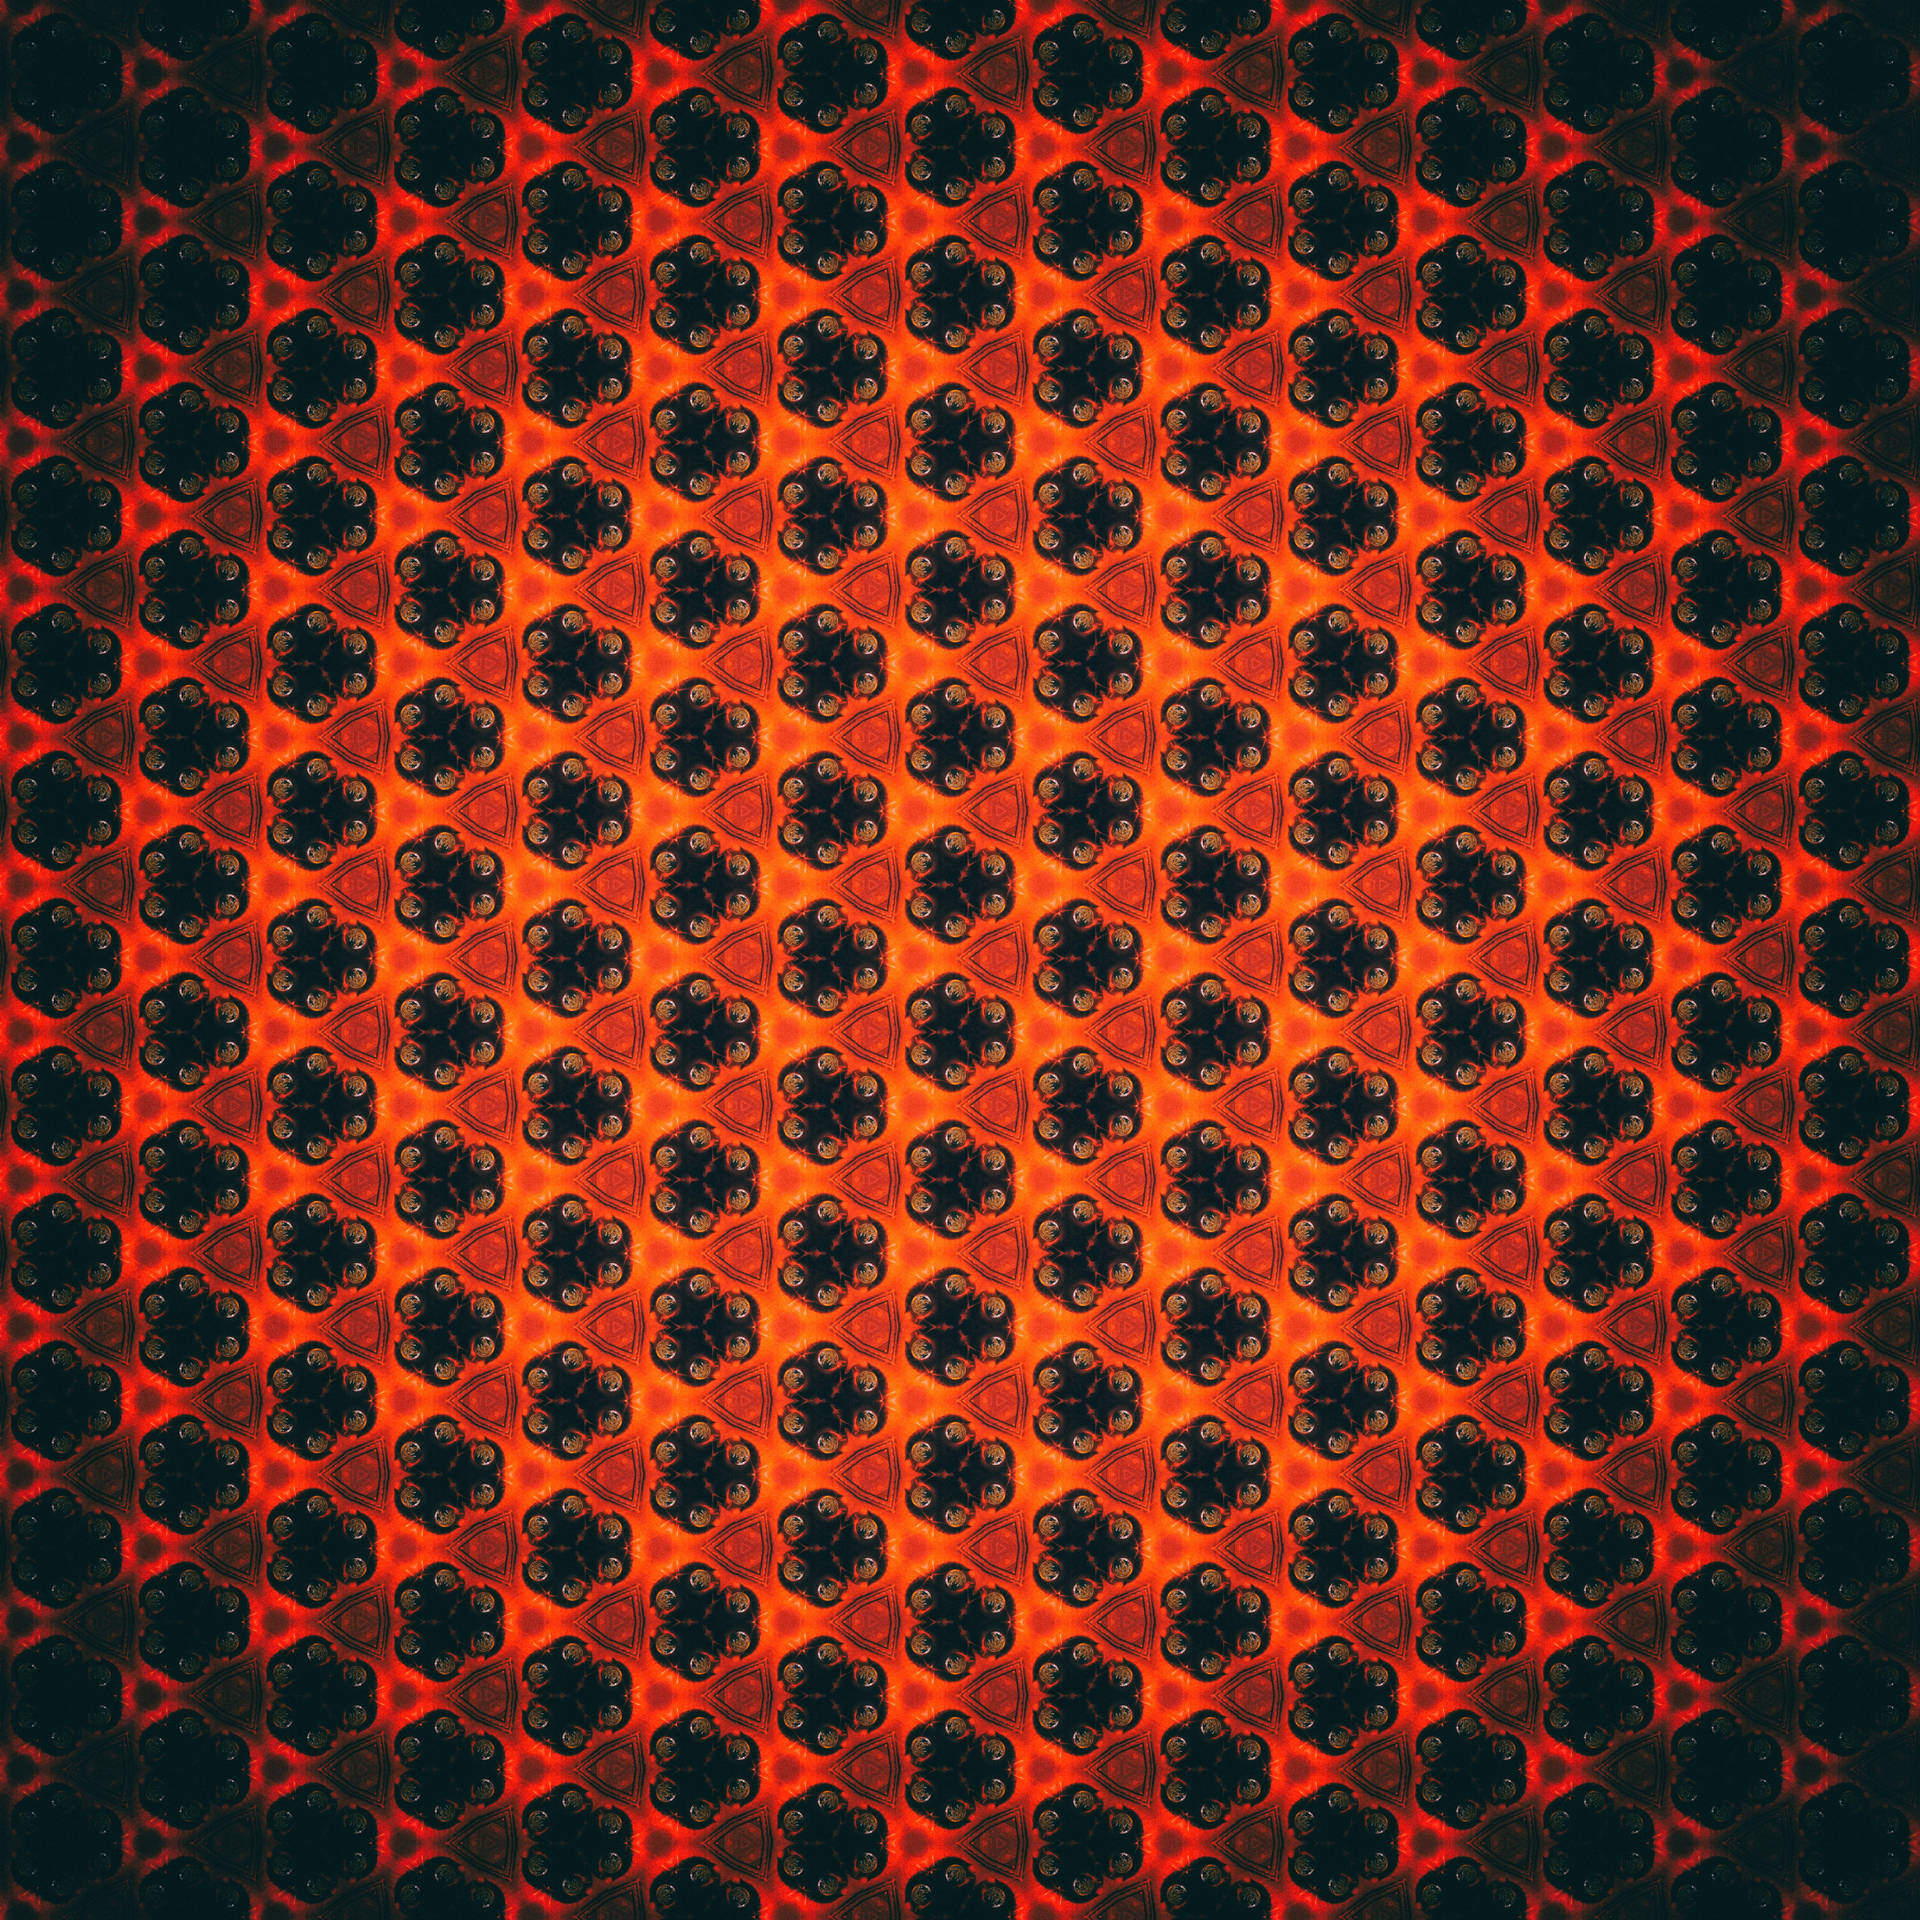 Pattern 5000X5000 wallpaper